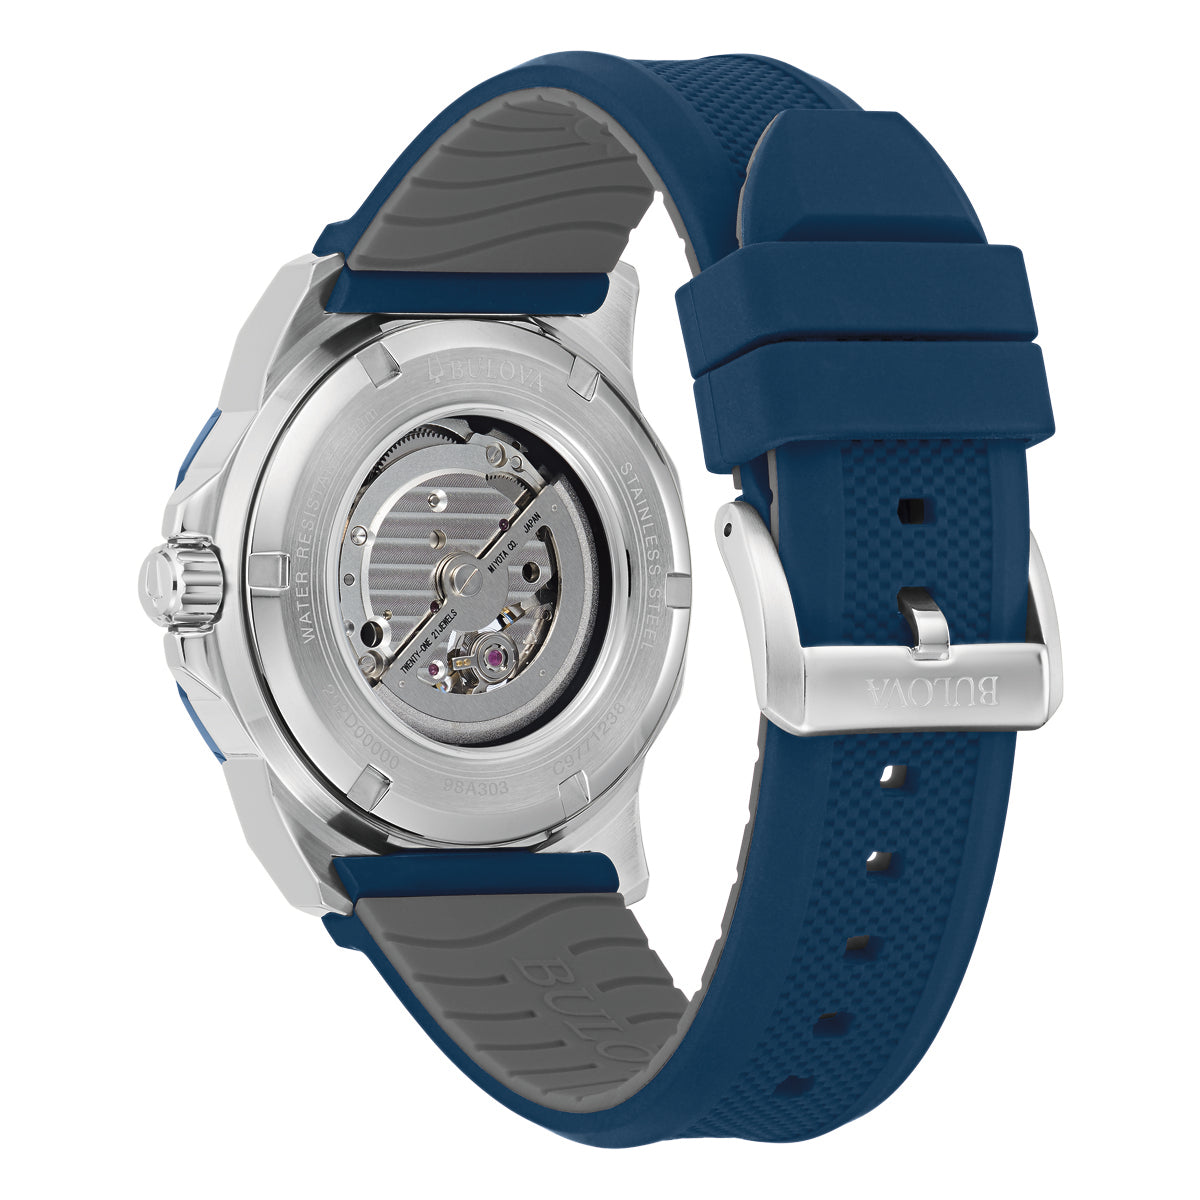 Bulova Men's Marine Star Automatic Watch 96A290